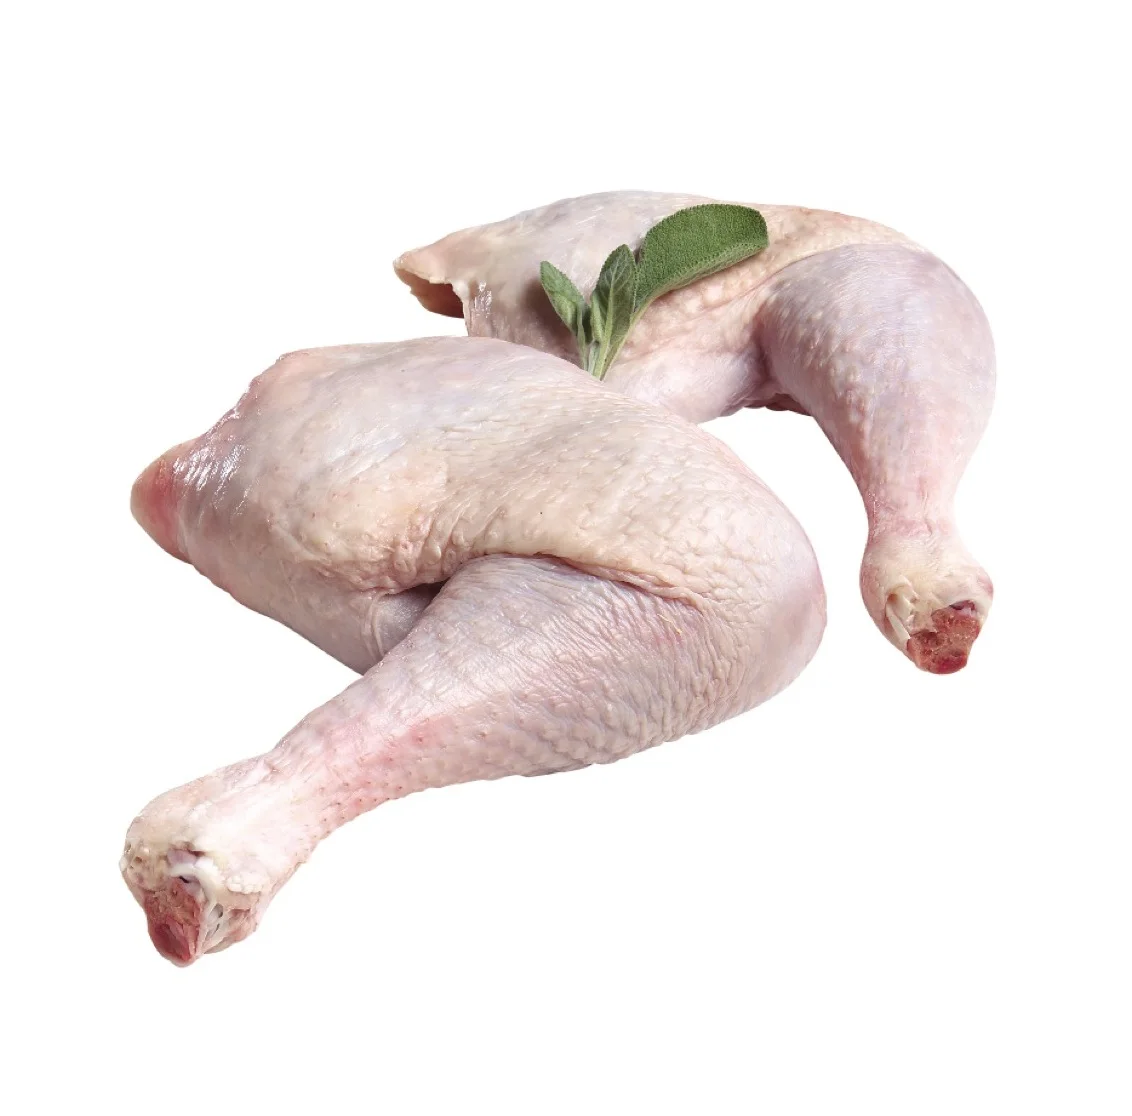 Wholesale Supplier Frozen Turkey Legs For Sale In Cheap Price (11000002064500)